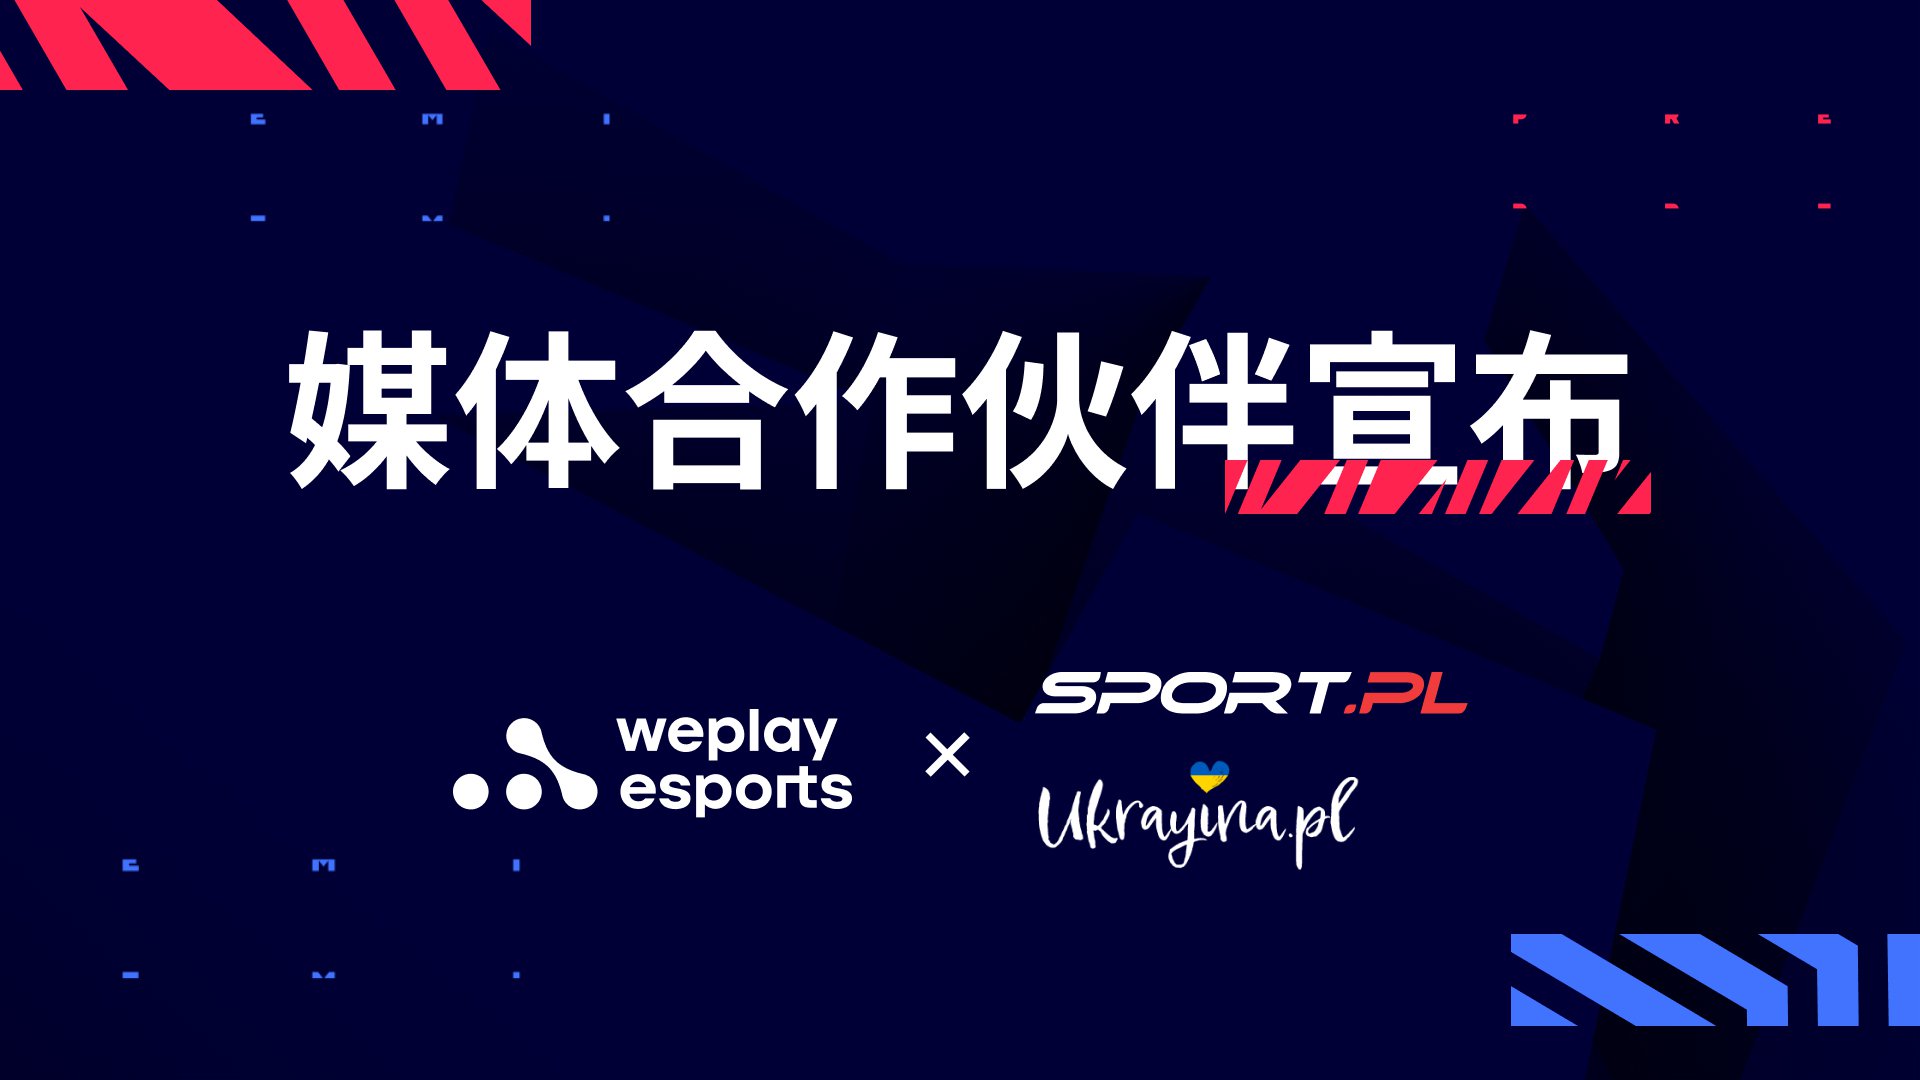 Sport.pl 和 Ukrayina.pl 成为 WePlay Esports 的乌克兰语转播的媒体合作伙伴。图像： WePlay Holding